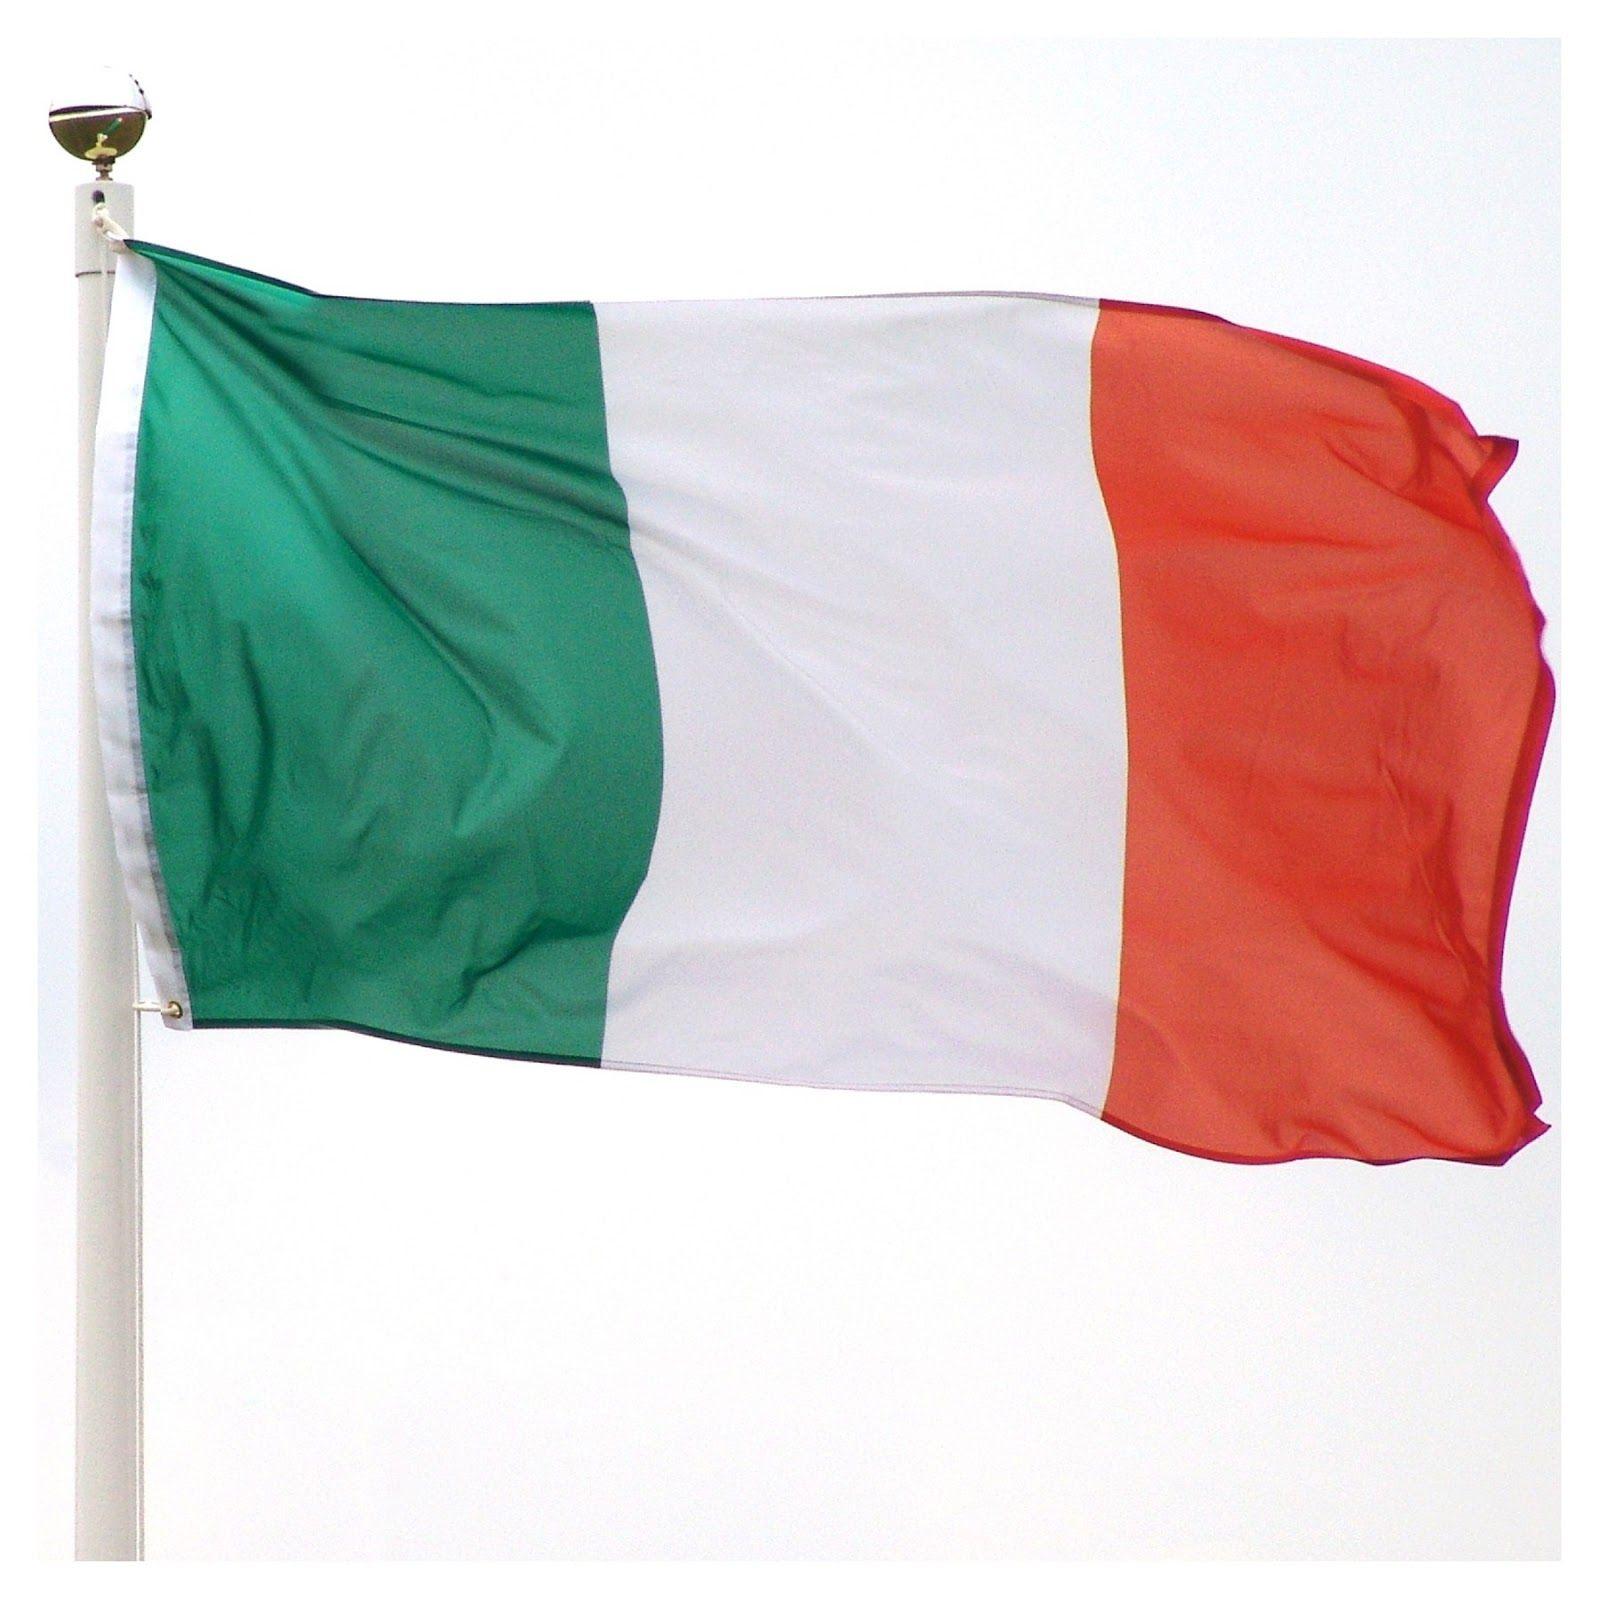 Irish flag of Ireland flags